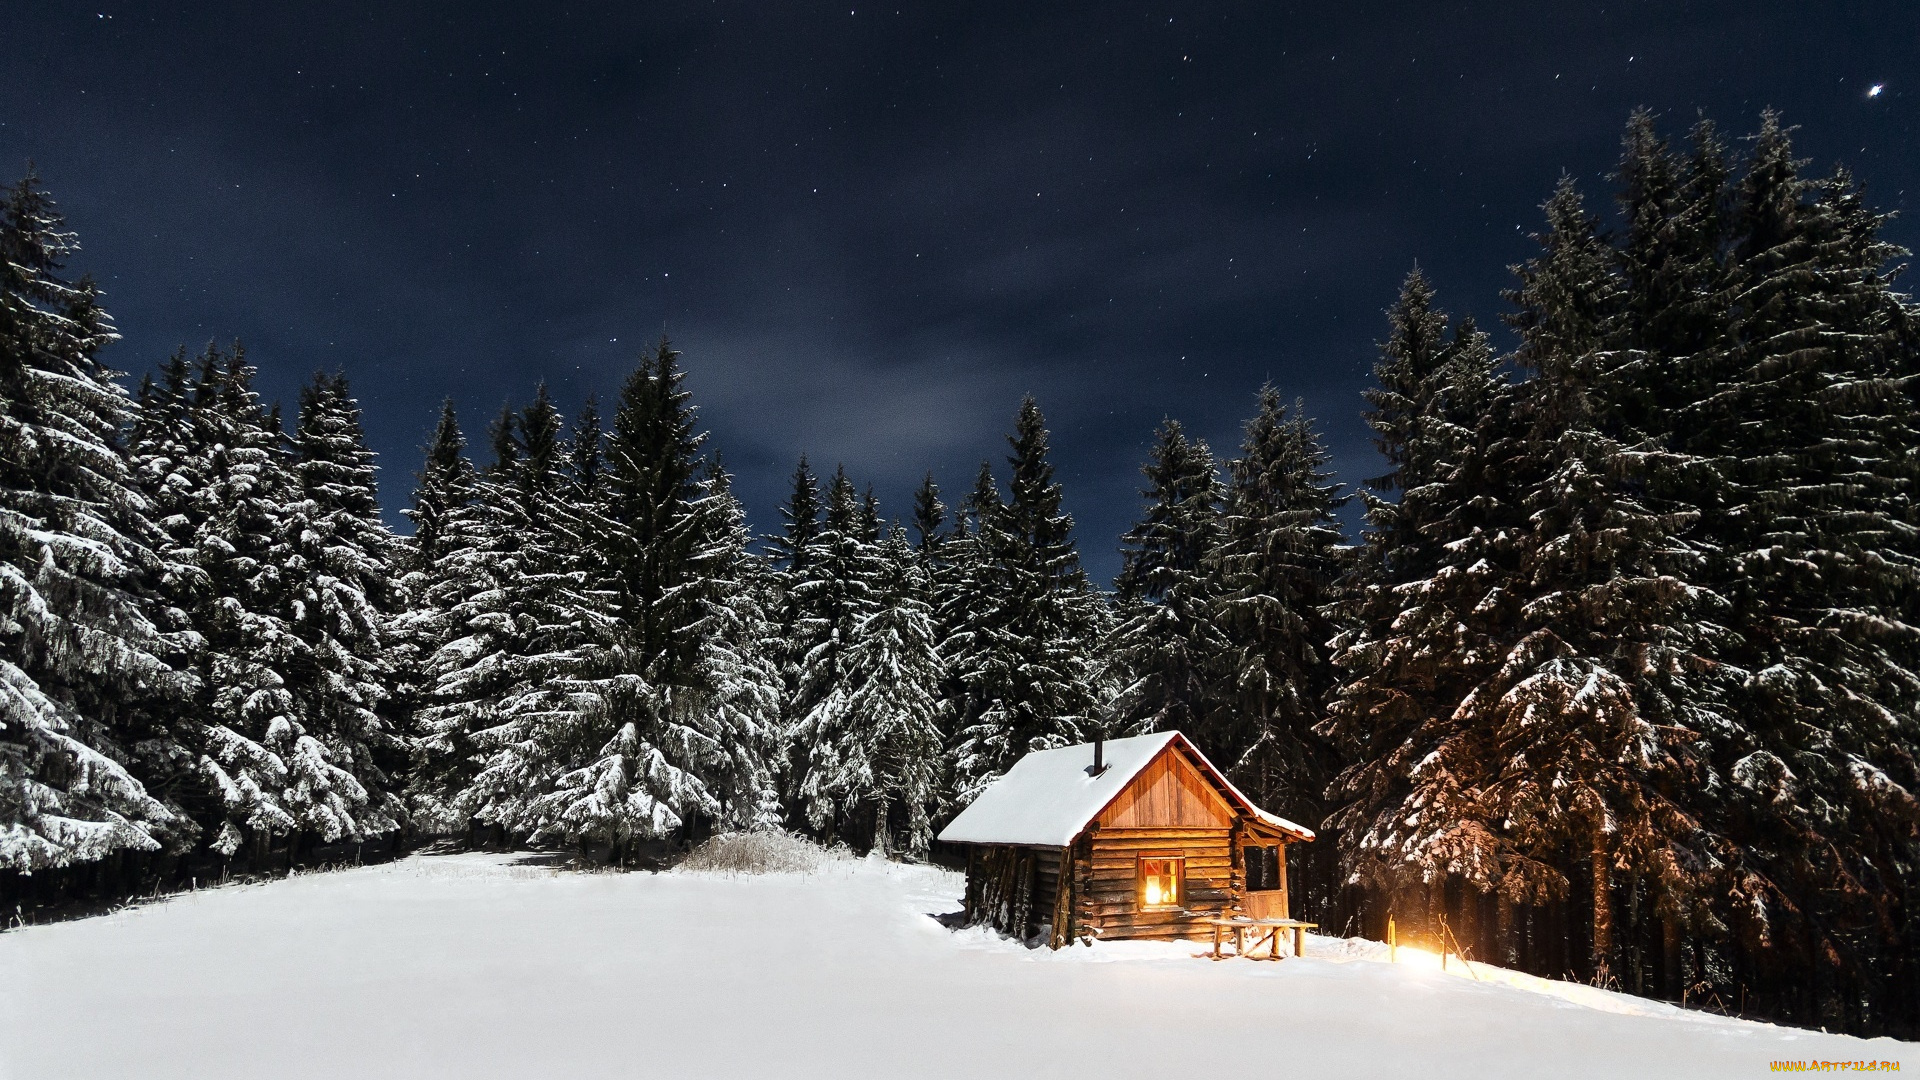 природа, зима, свет, деревья, дом, ночь, небо, изба, лес, звезды, опушка, снег